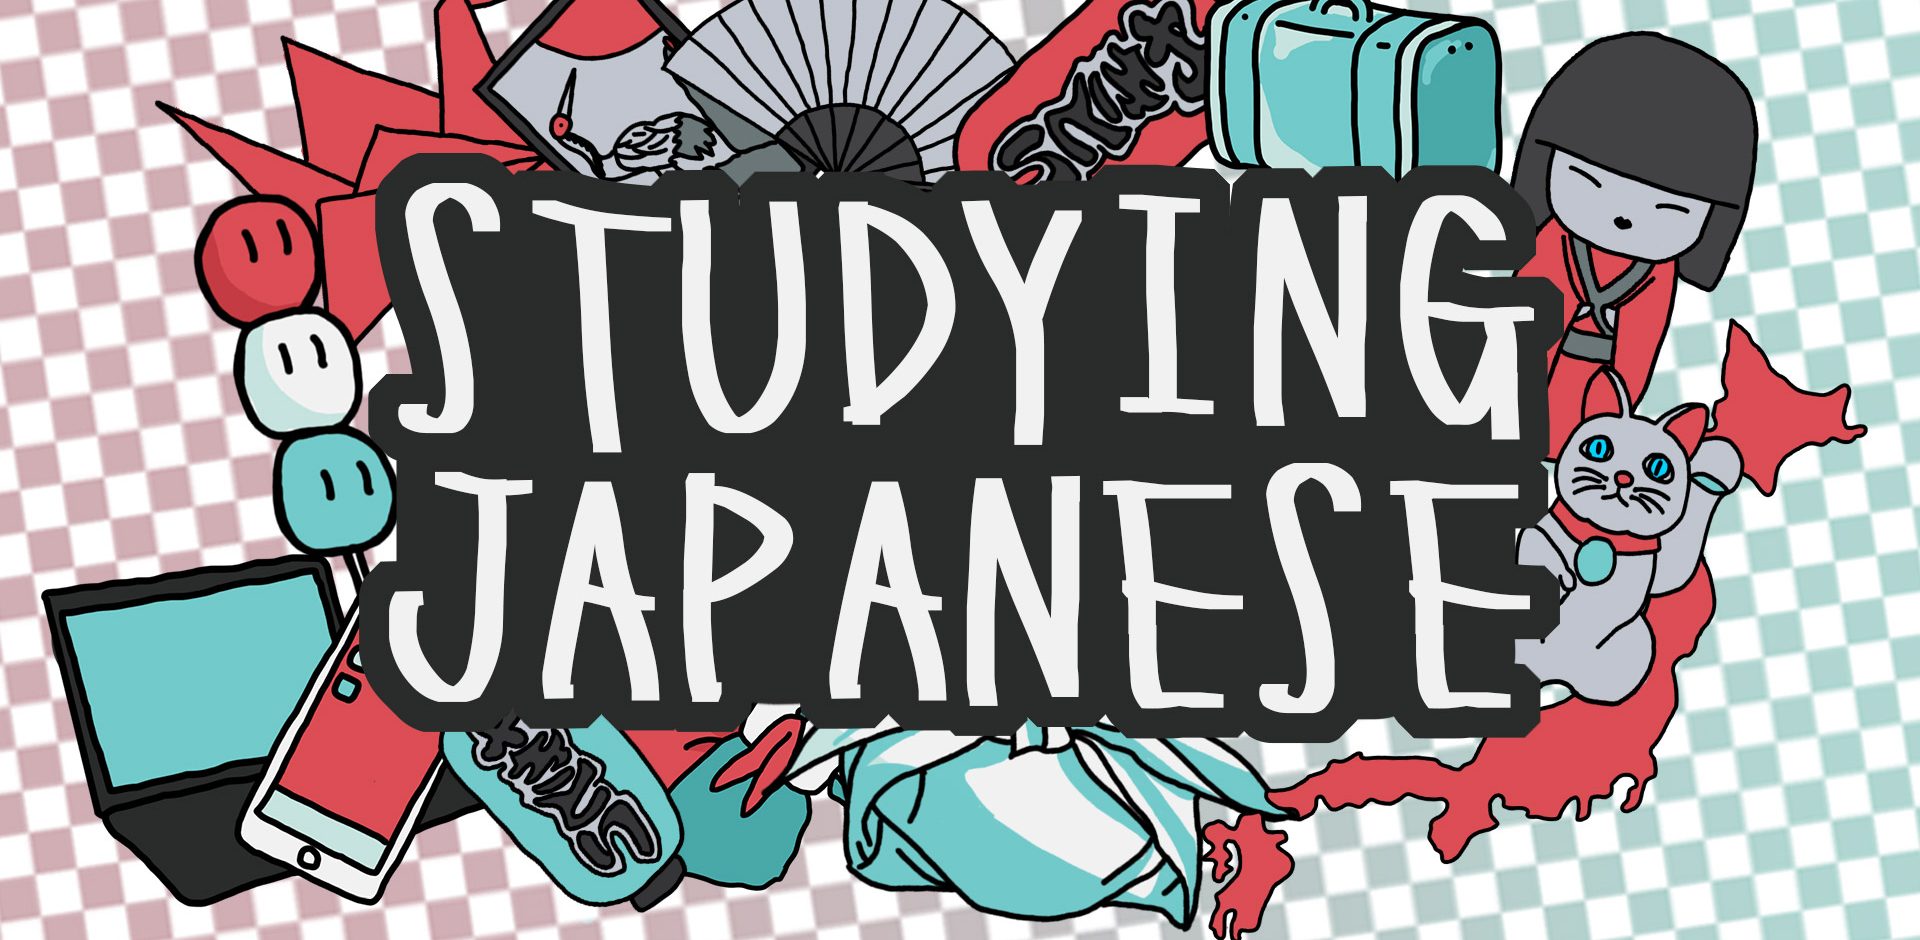 How I studied Japanese